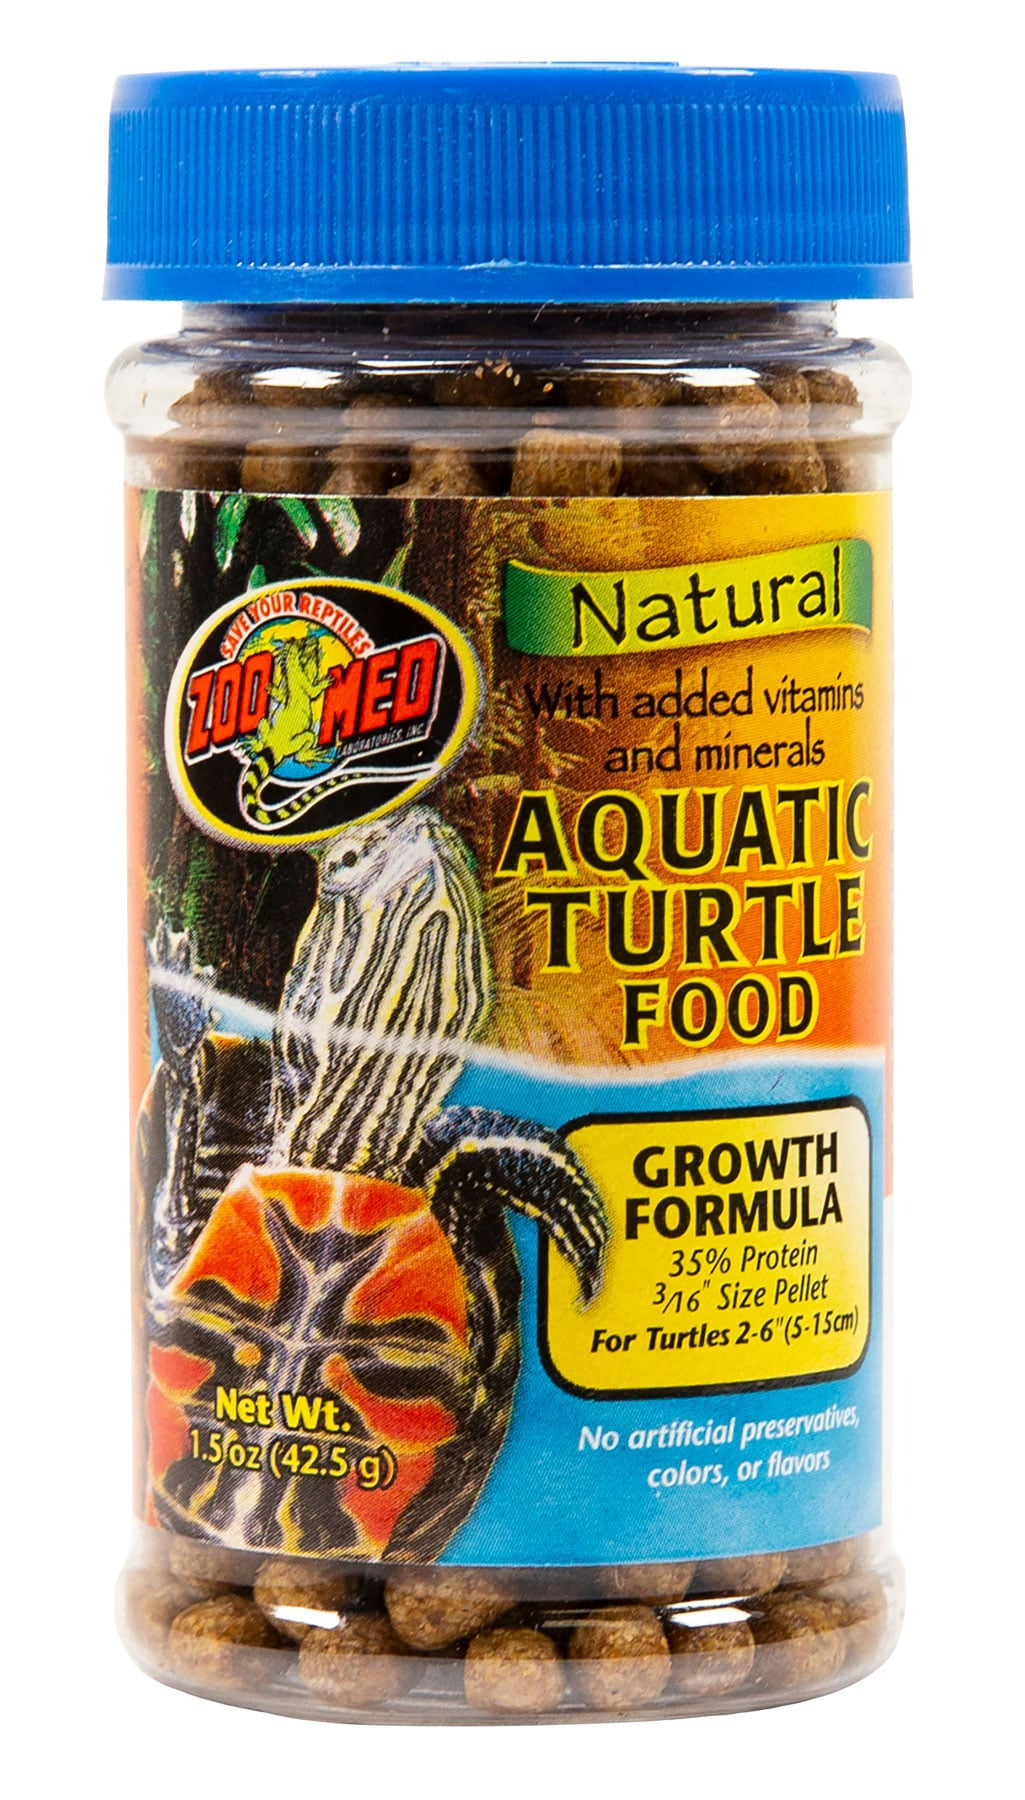 1.5 oz Zoo Med Natural Aquatic Turtle Food Growth Formula